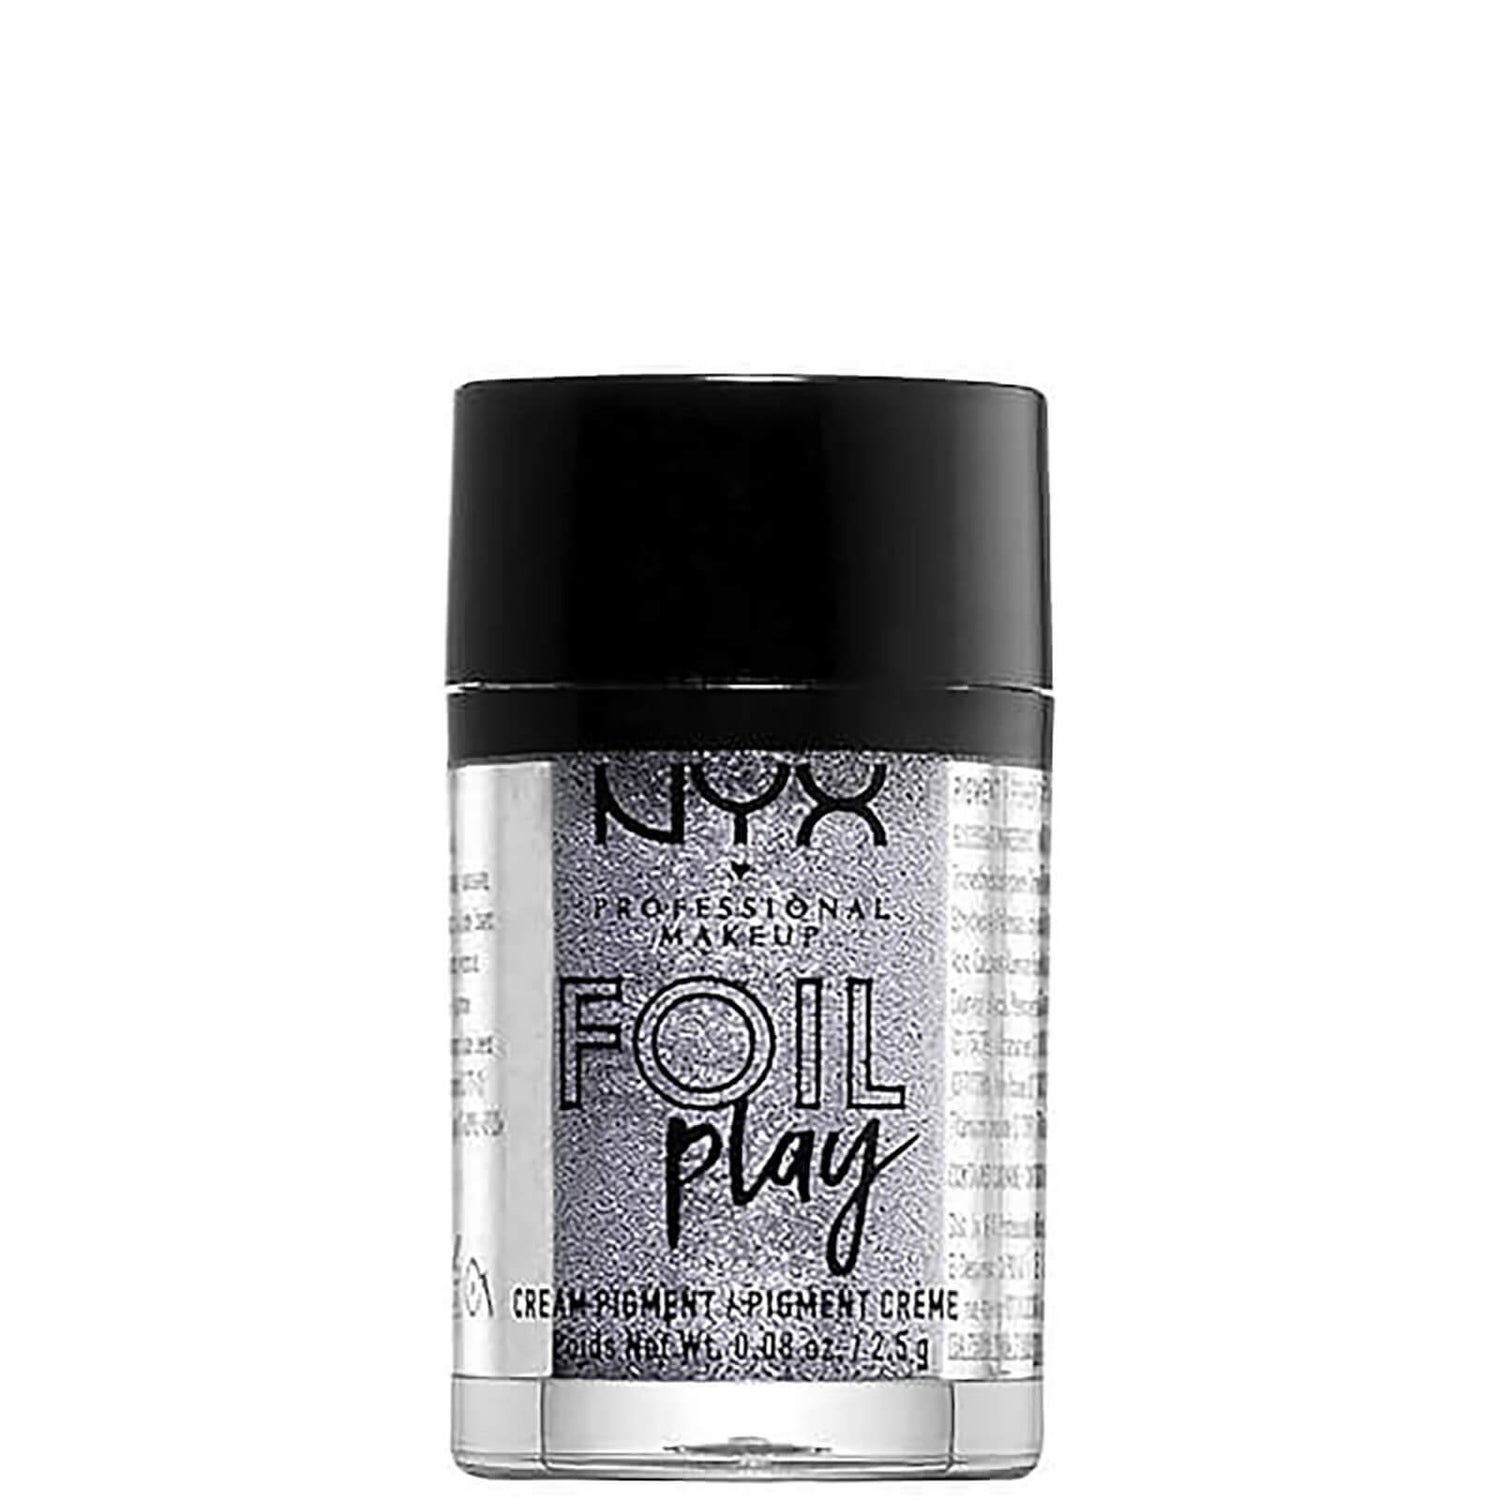 NYX Professional Makeup Foil Play Cream Pigment Eyeshadow (flere nyanser)